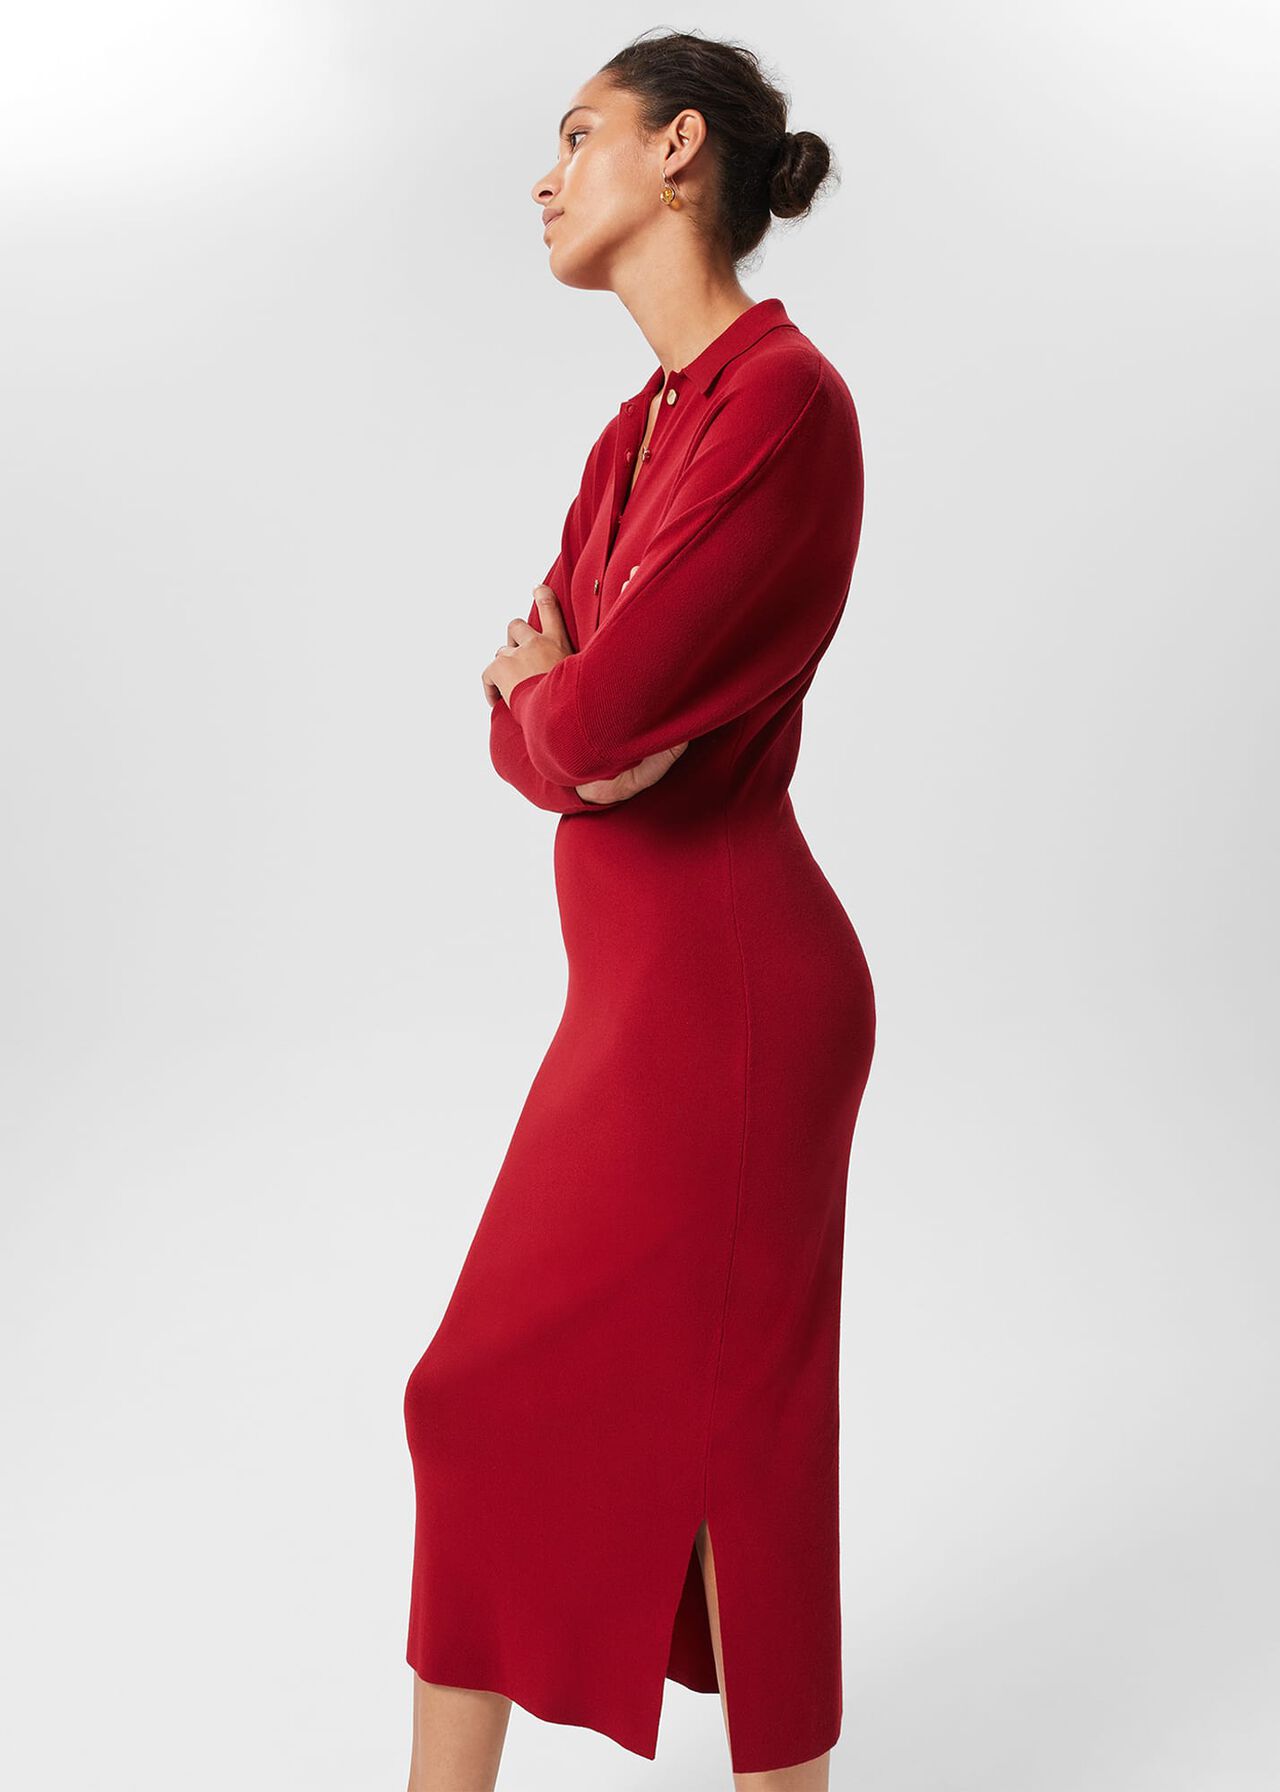 Arabelle Knitted Dress, Red, hi-res